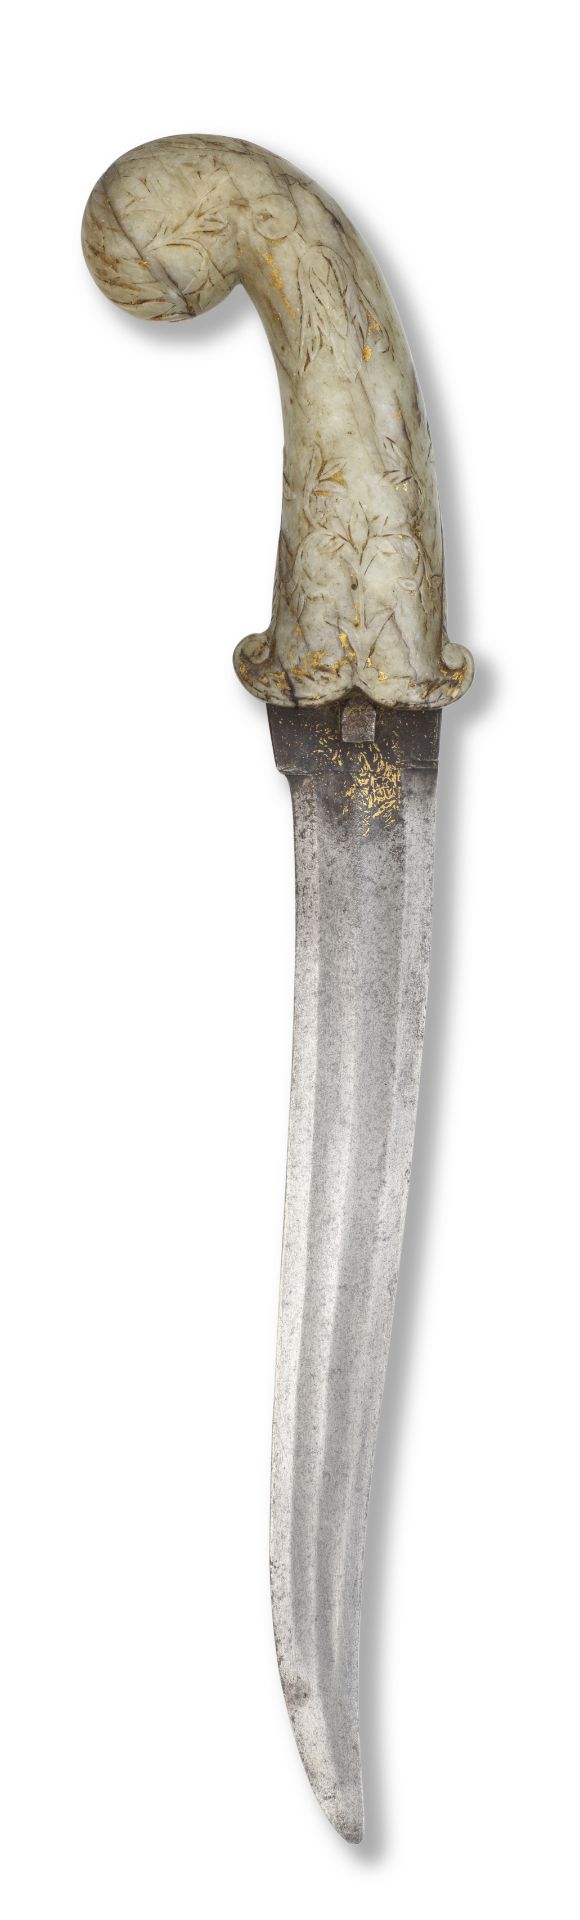 A Mughal jade-hilted gold-koftgari steel dagger (khanjar) North India, 18th Century